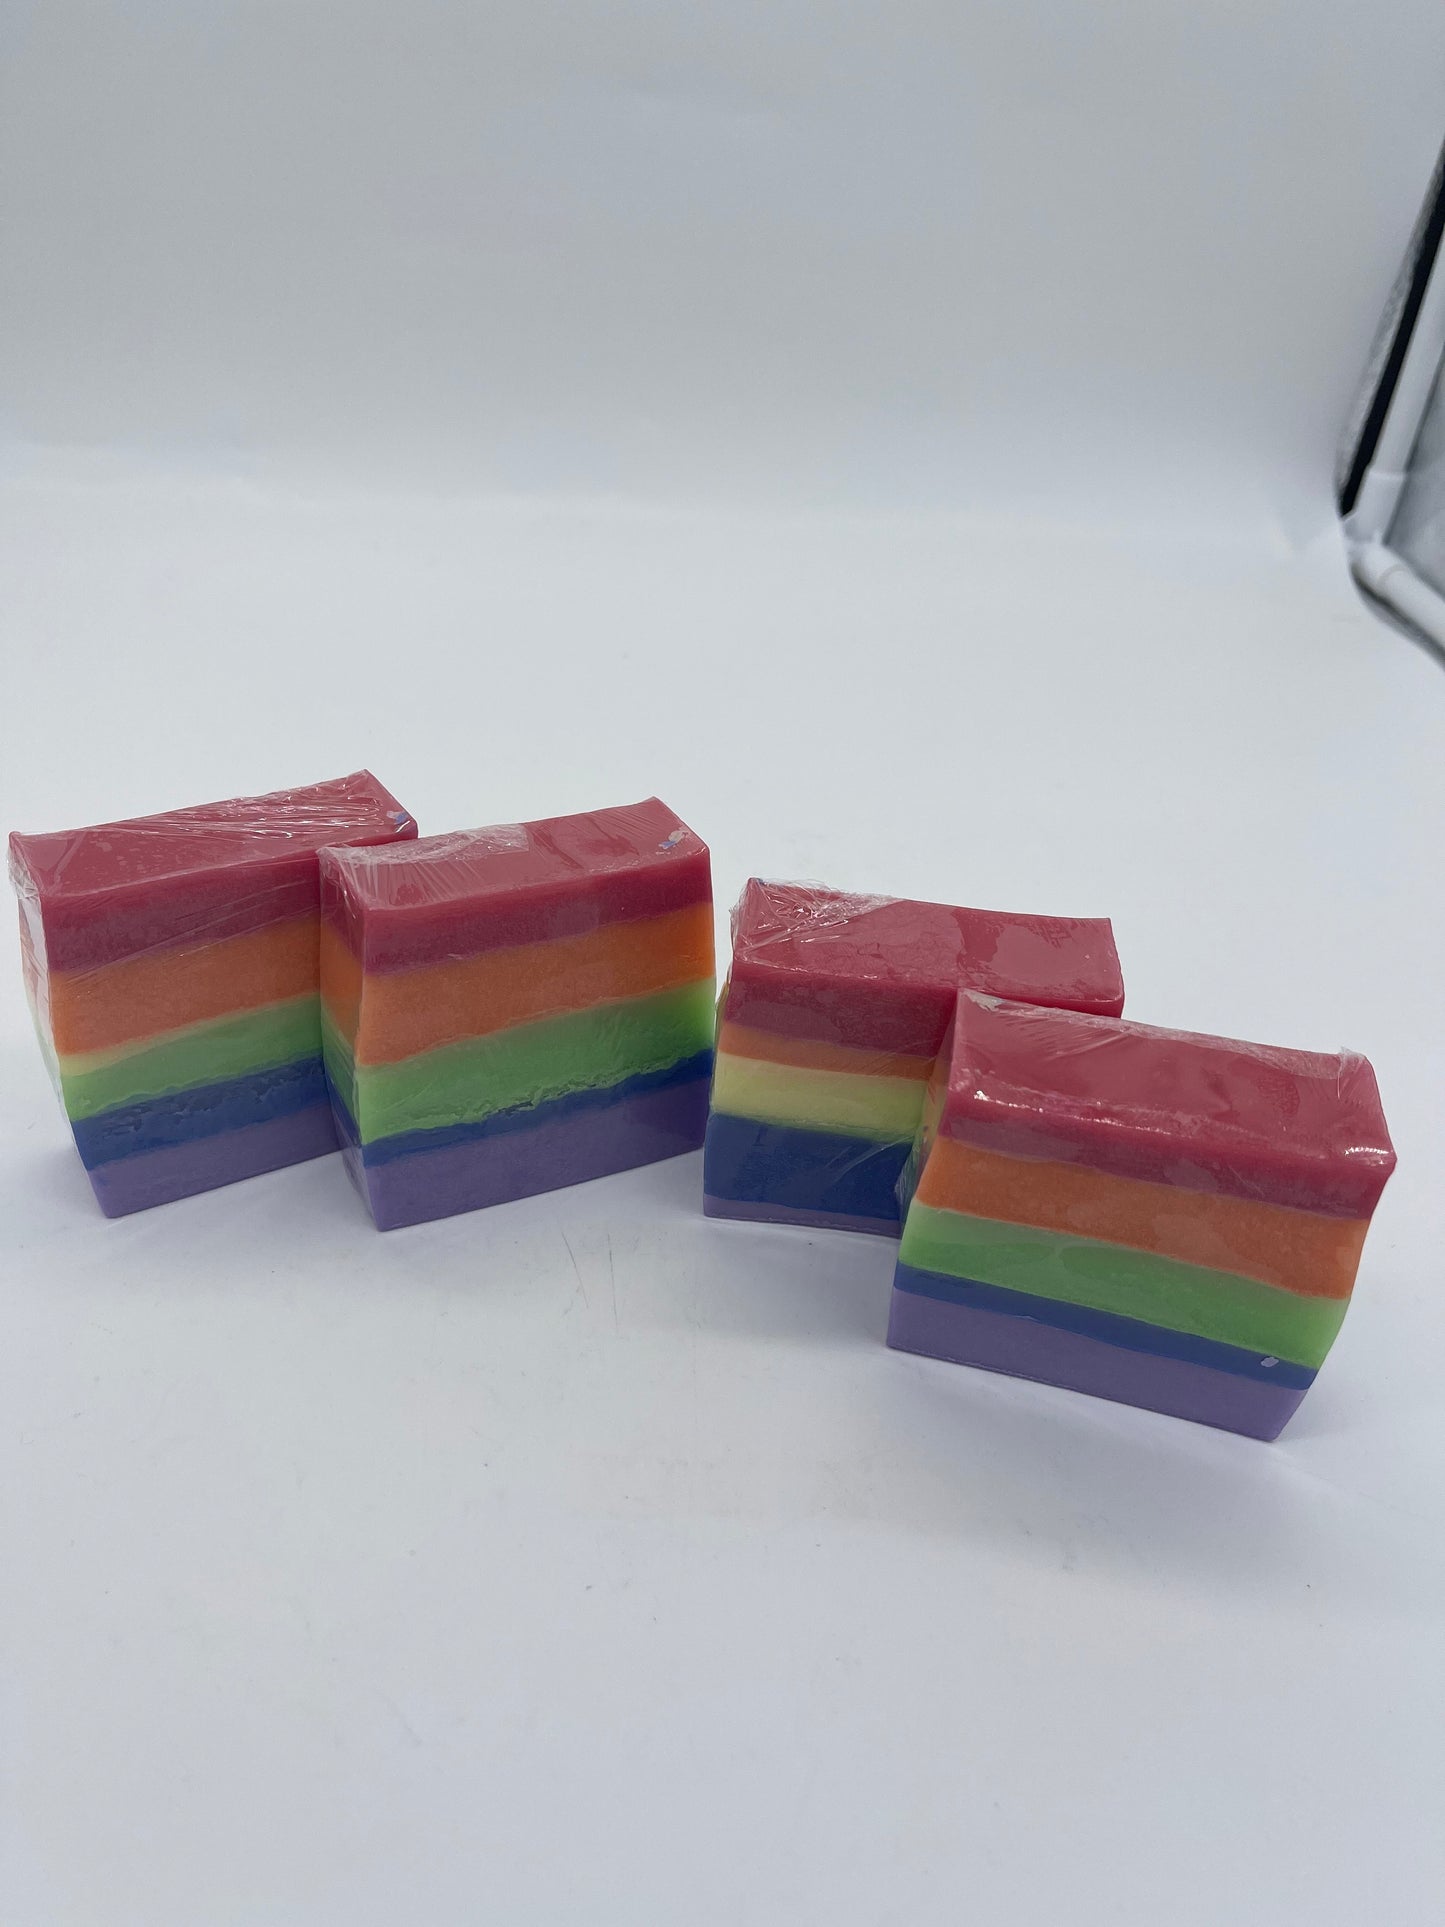 Layers of Rainbow Soap